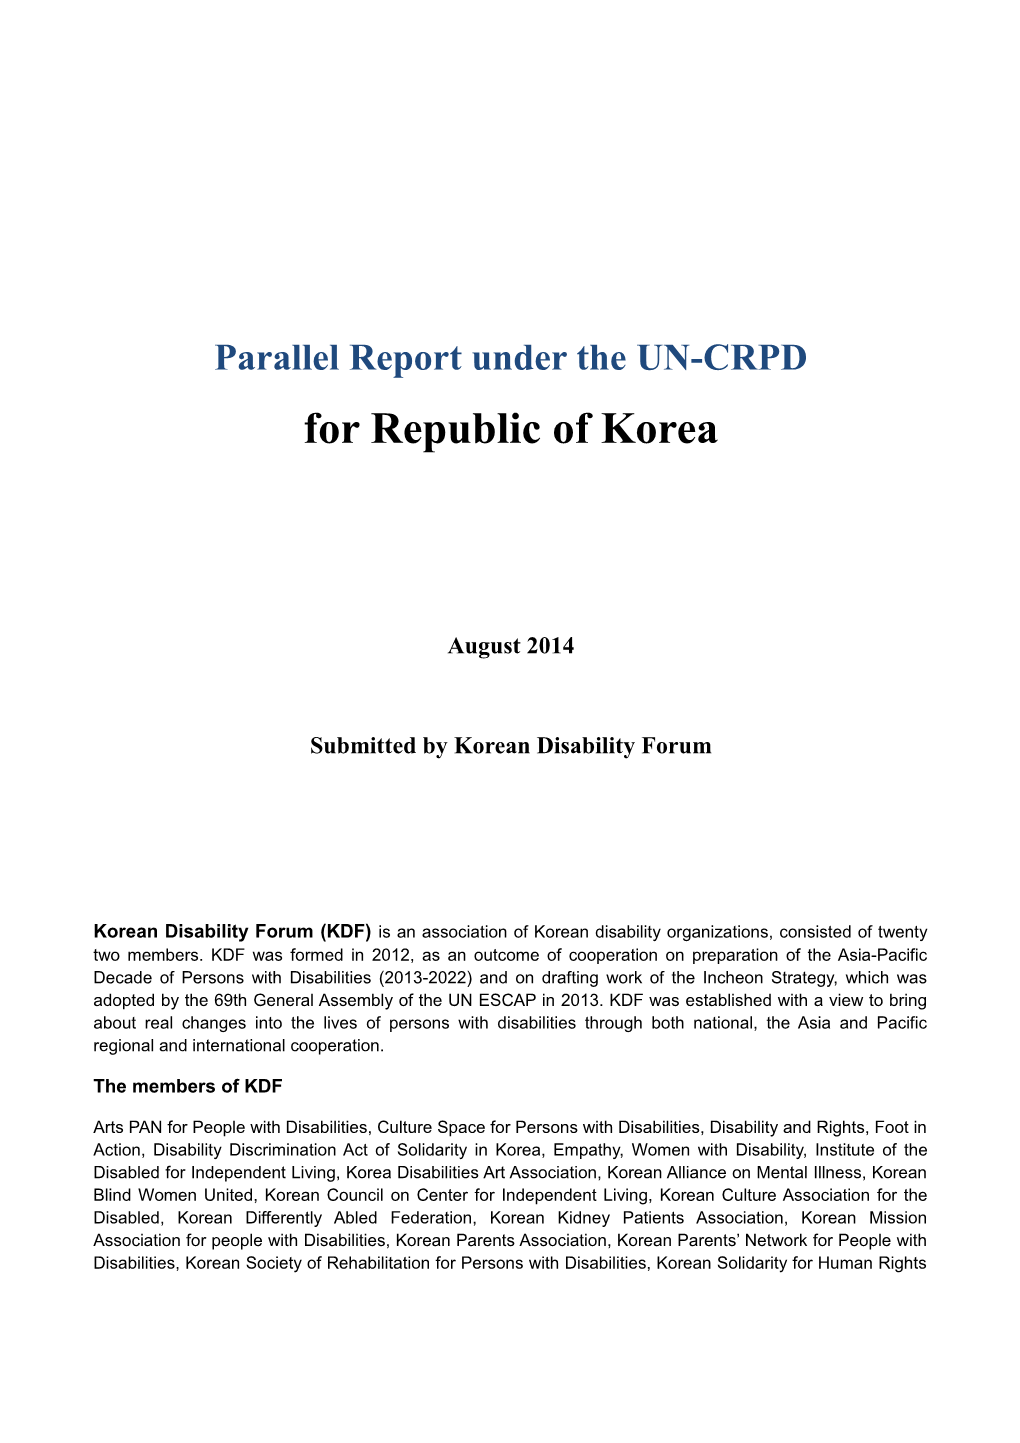 Parallel Report Under the UN-CRPD